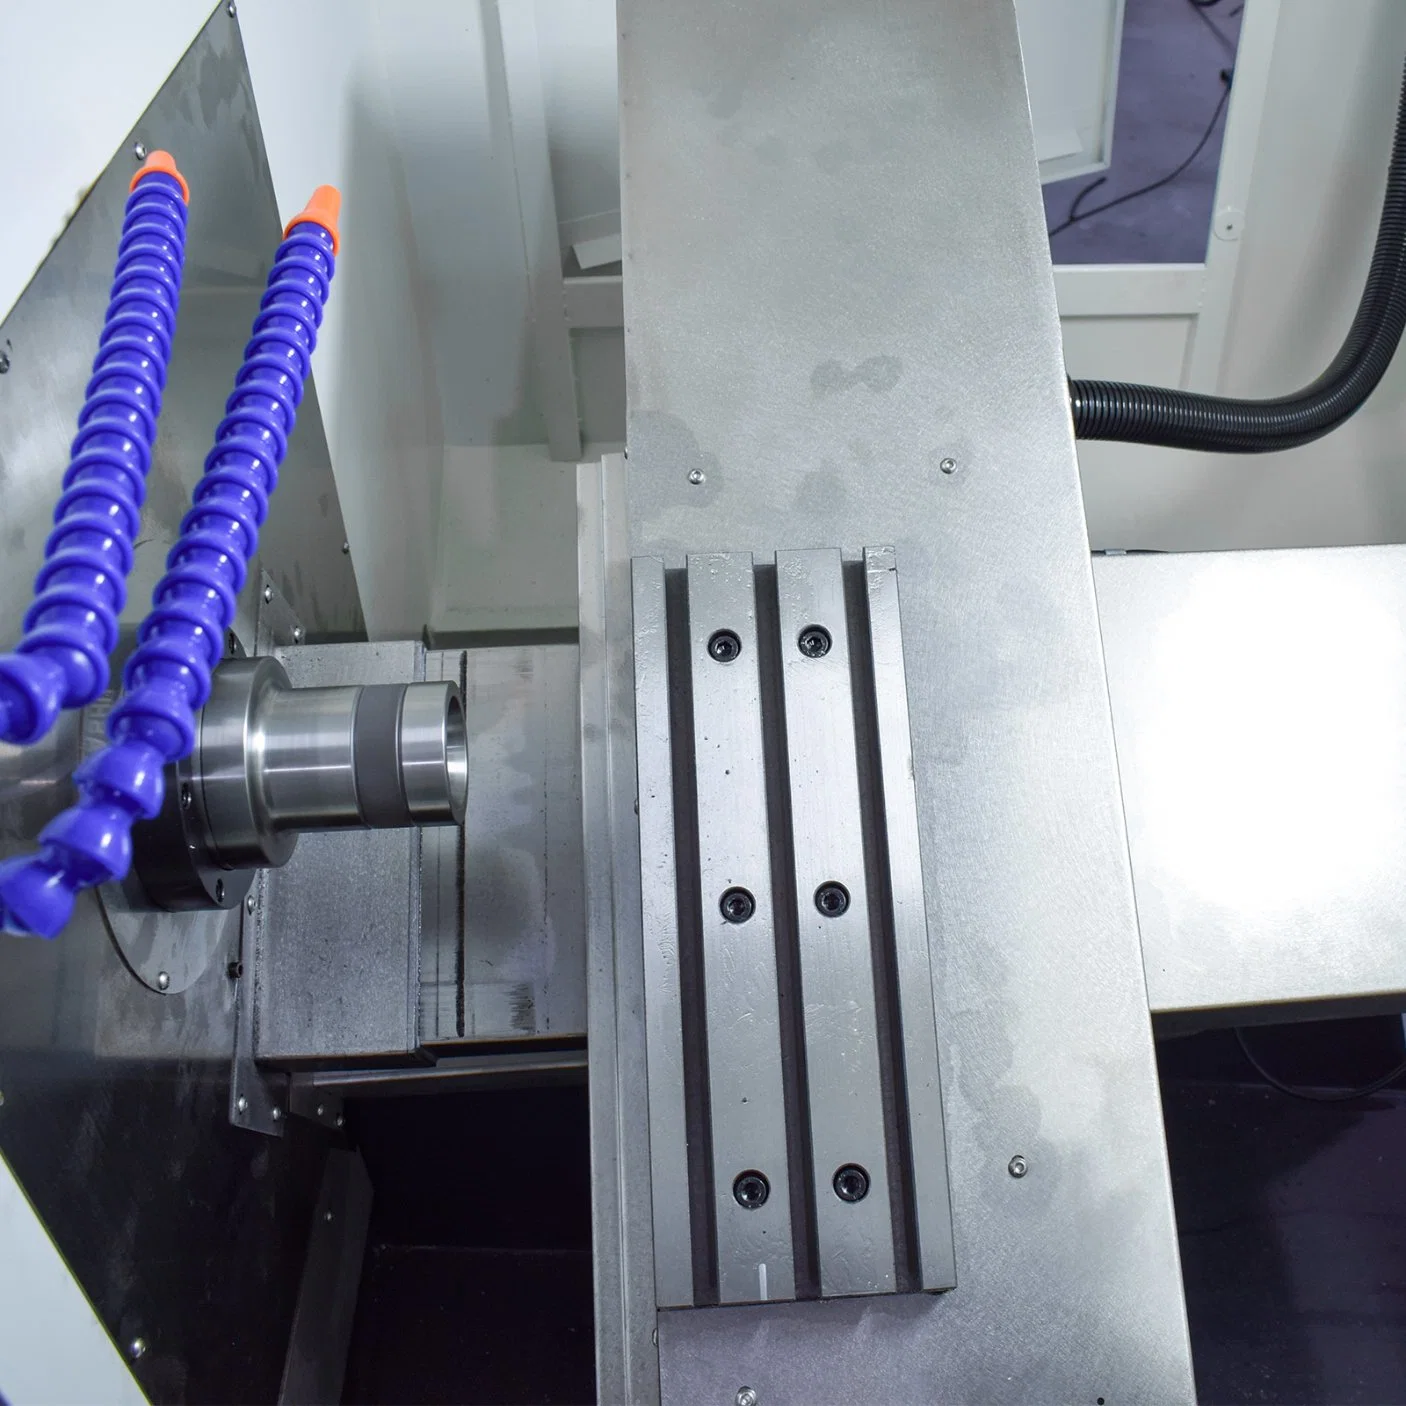 Szgh Manufacturer Low-Cost Combination CNC Lathe and Milling Machine China Horizontal CNC Metal Lathe Machine